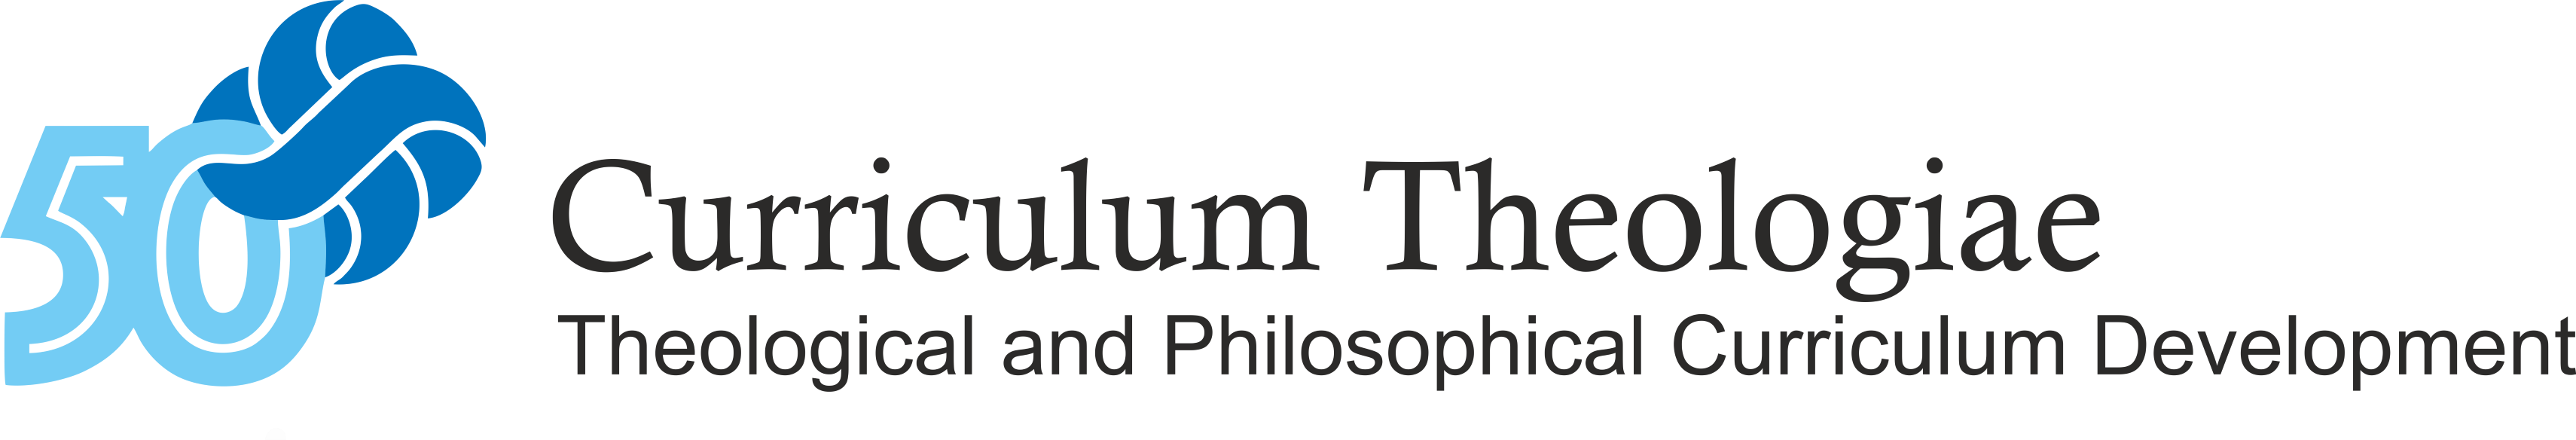 Curriculum Theologiae - Theological and Philosophical Curriculum Development